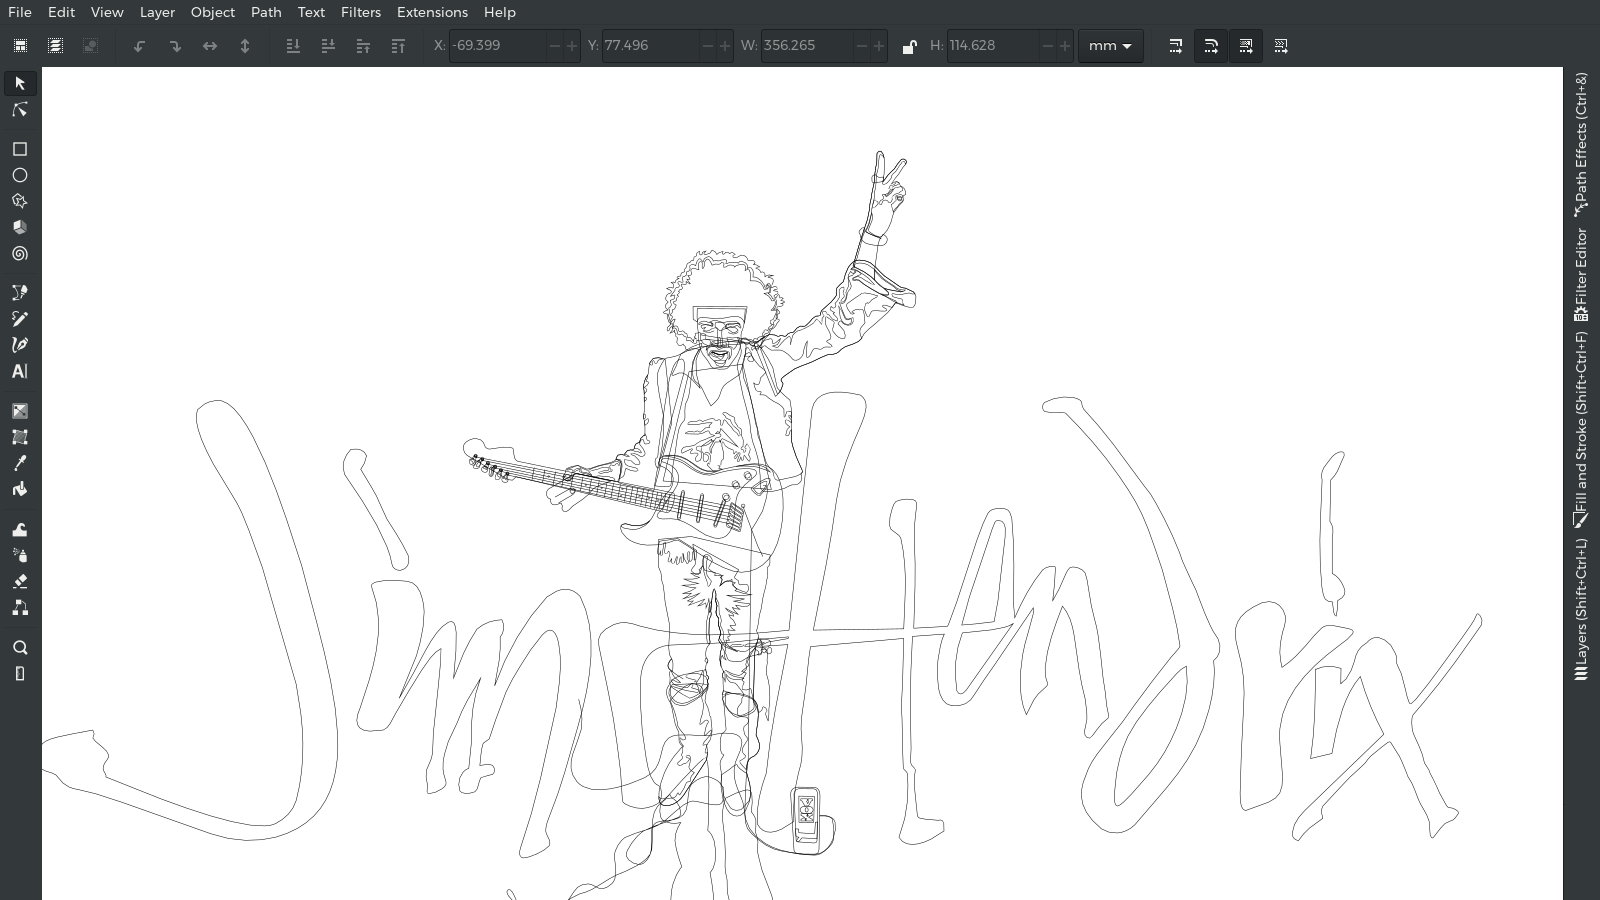 Outline Vectors – Jimi Hendrix – Inkscape Screenshot – Advanced Vector Graphics – SVG Illustration by gfkDSGN